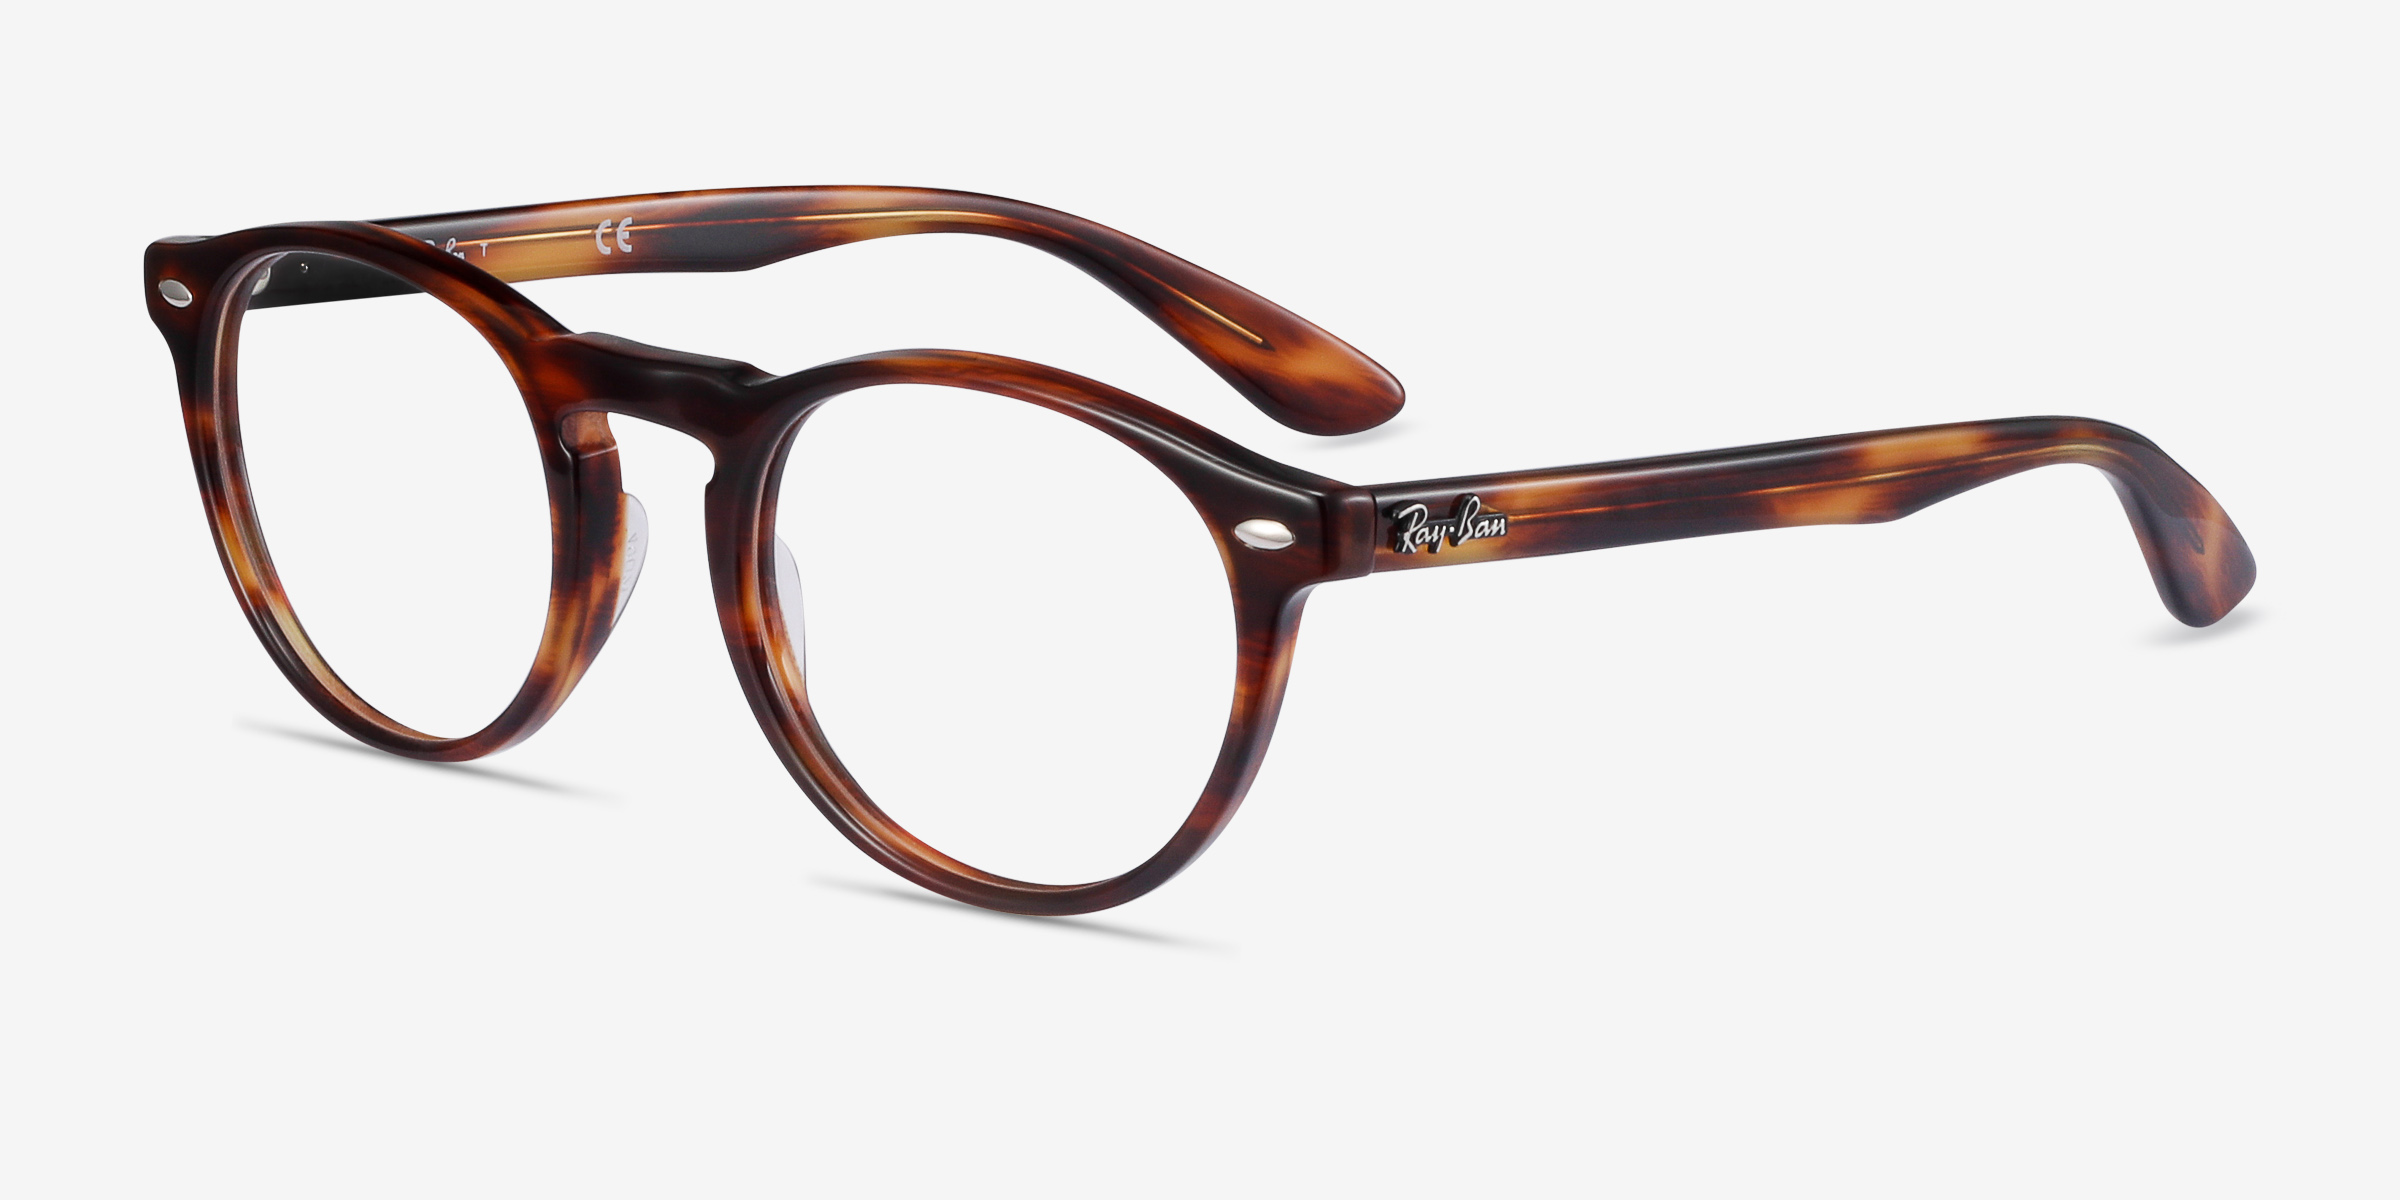 Ray-Ban RB5283 - Round Warm Tortoise Frame Eyeglasses | Eyebuydirect Canada